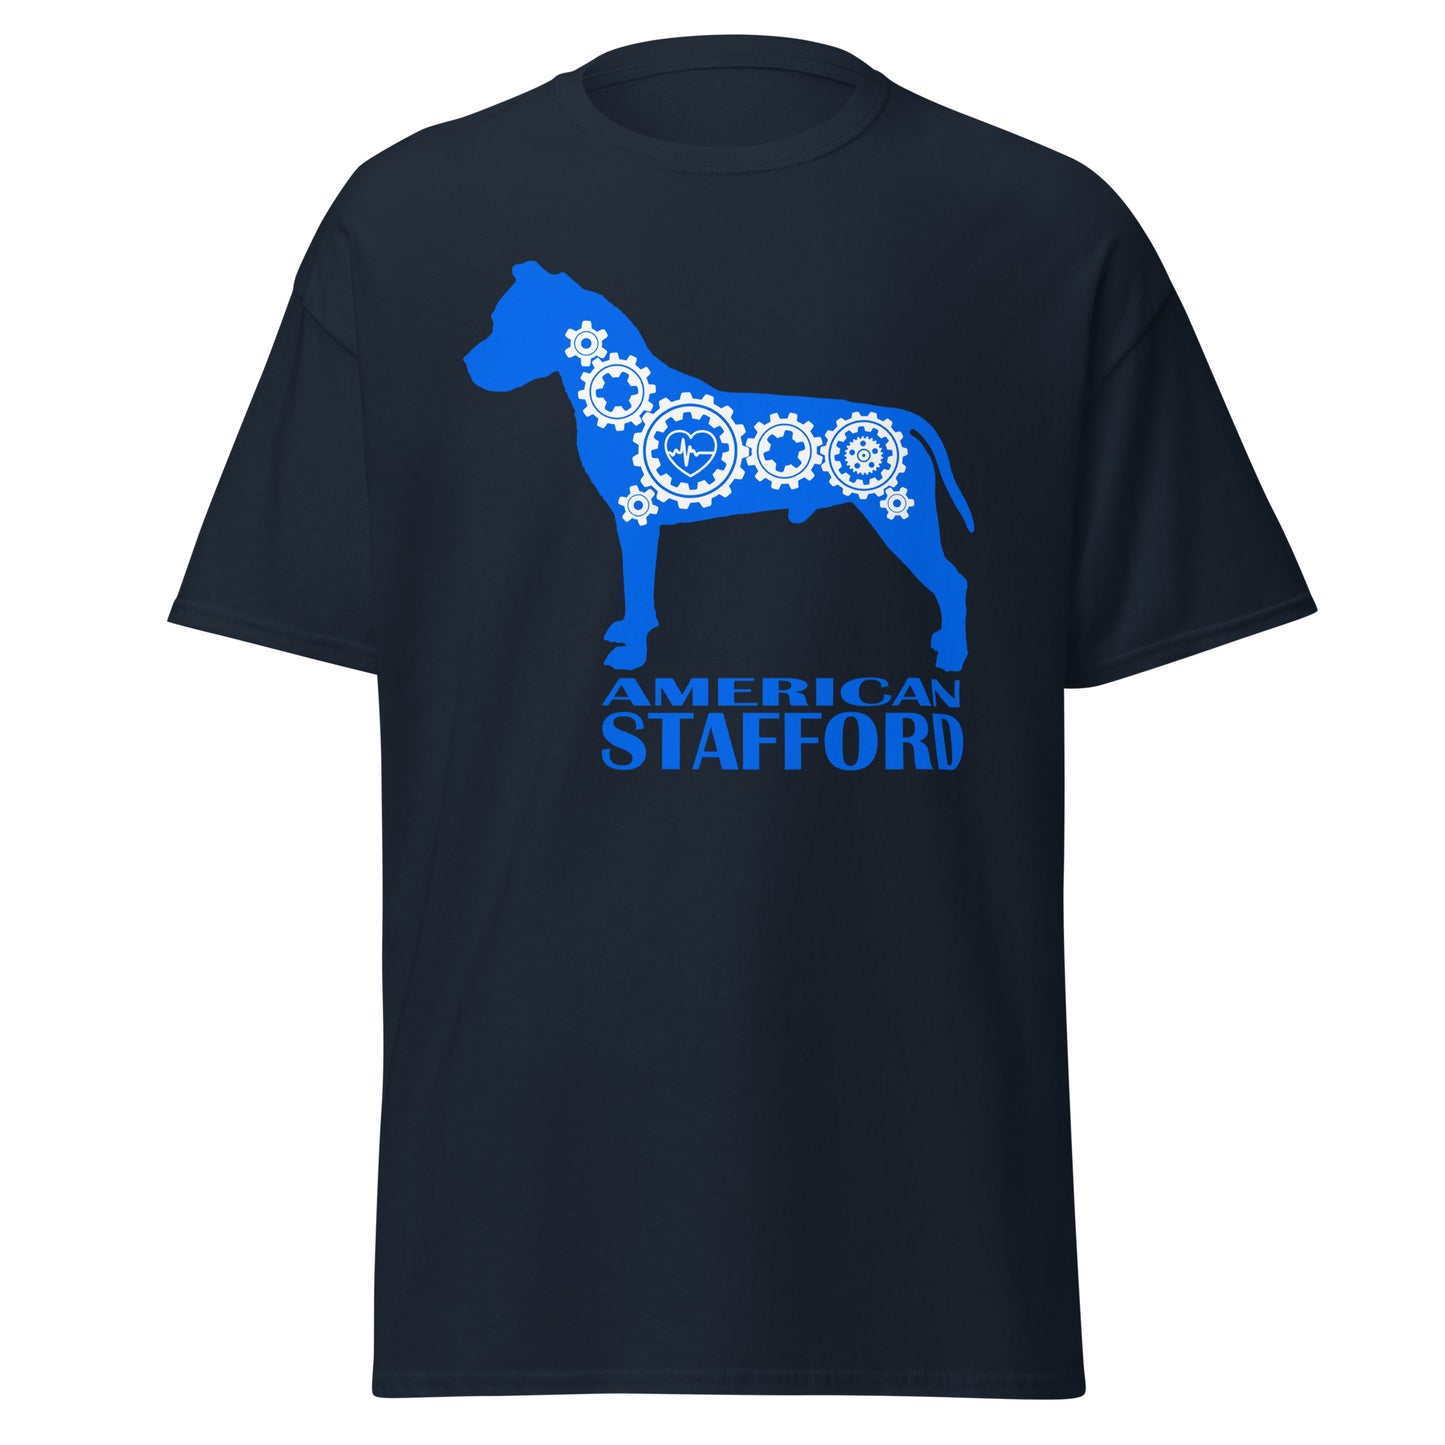 American Stafford Bionic men’s navy t-shirt by Dog Artistry.